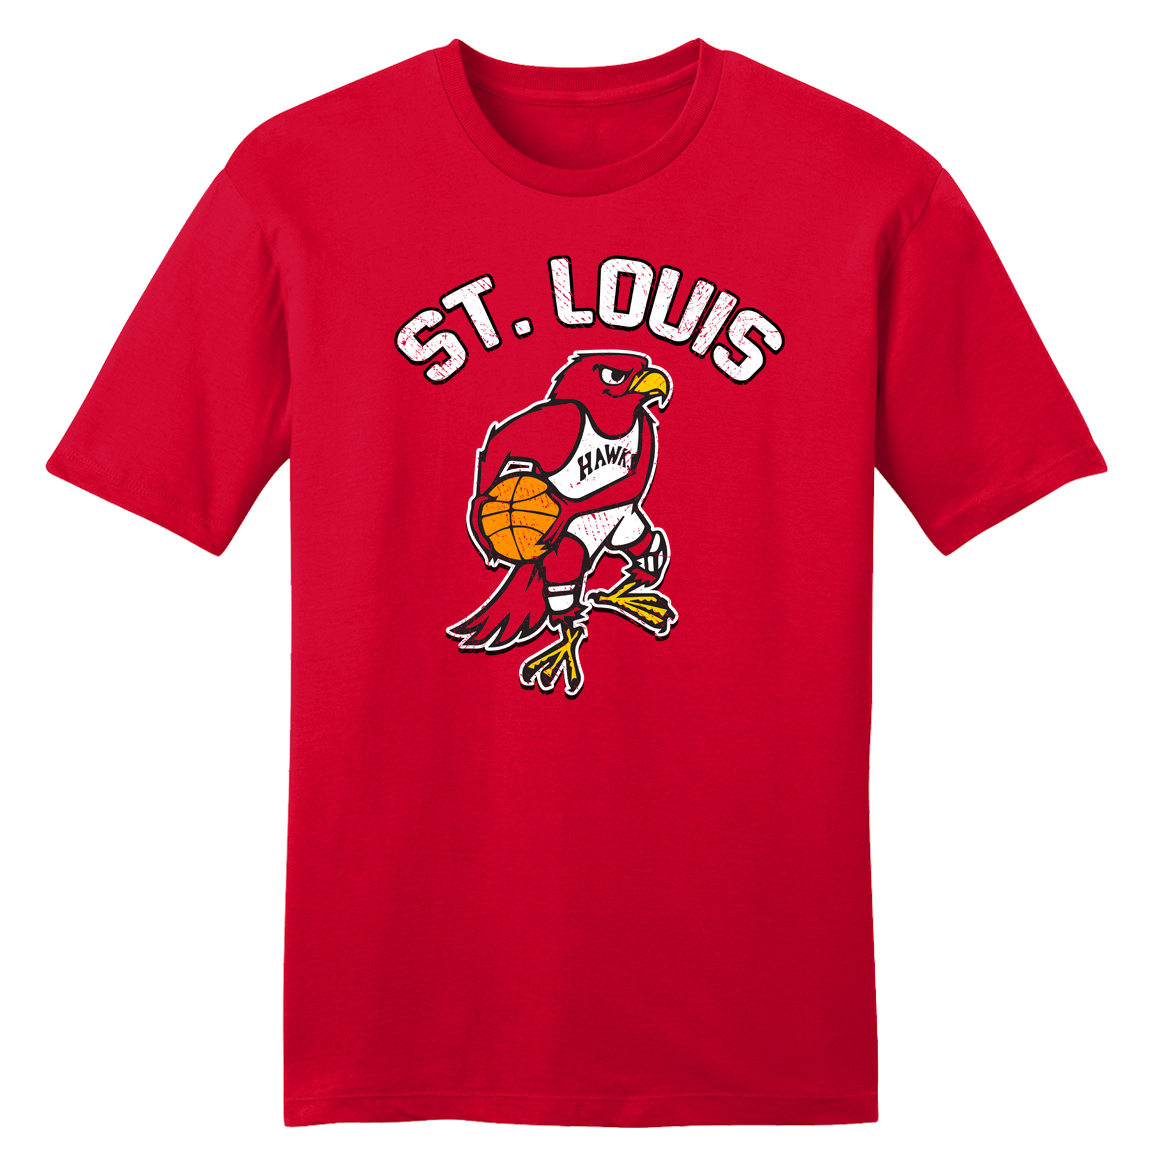 St. Louis Hawks Basketball T-shirt